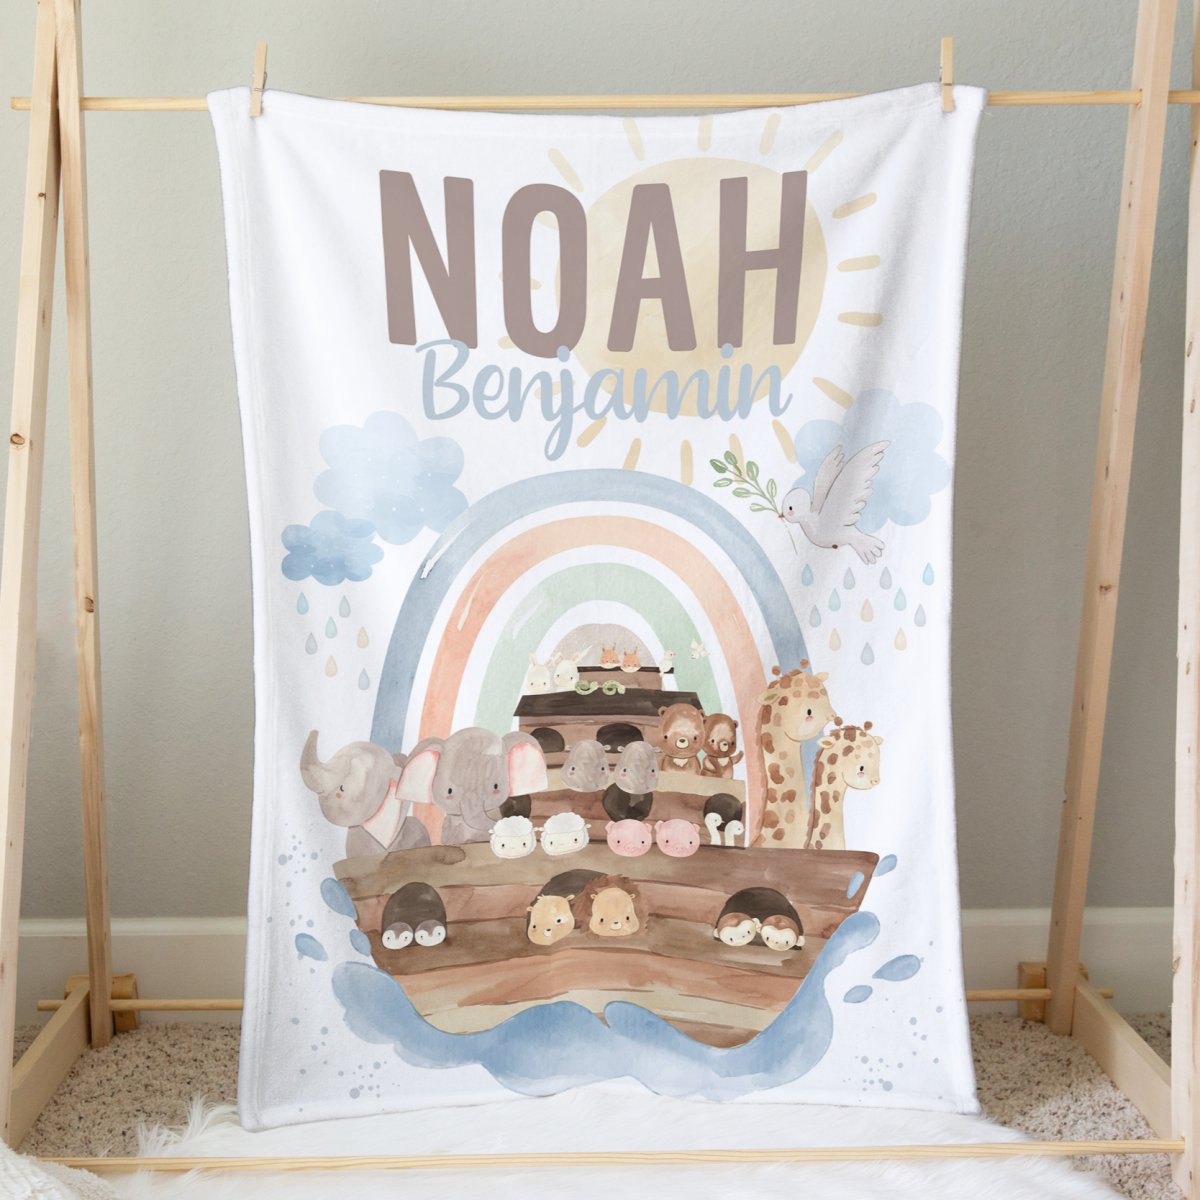 Noah's Ark Personalized Minky Blanket - gender_boy, Noah's Ark, Personalized_Yes